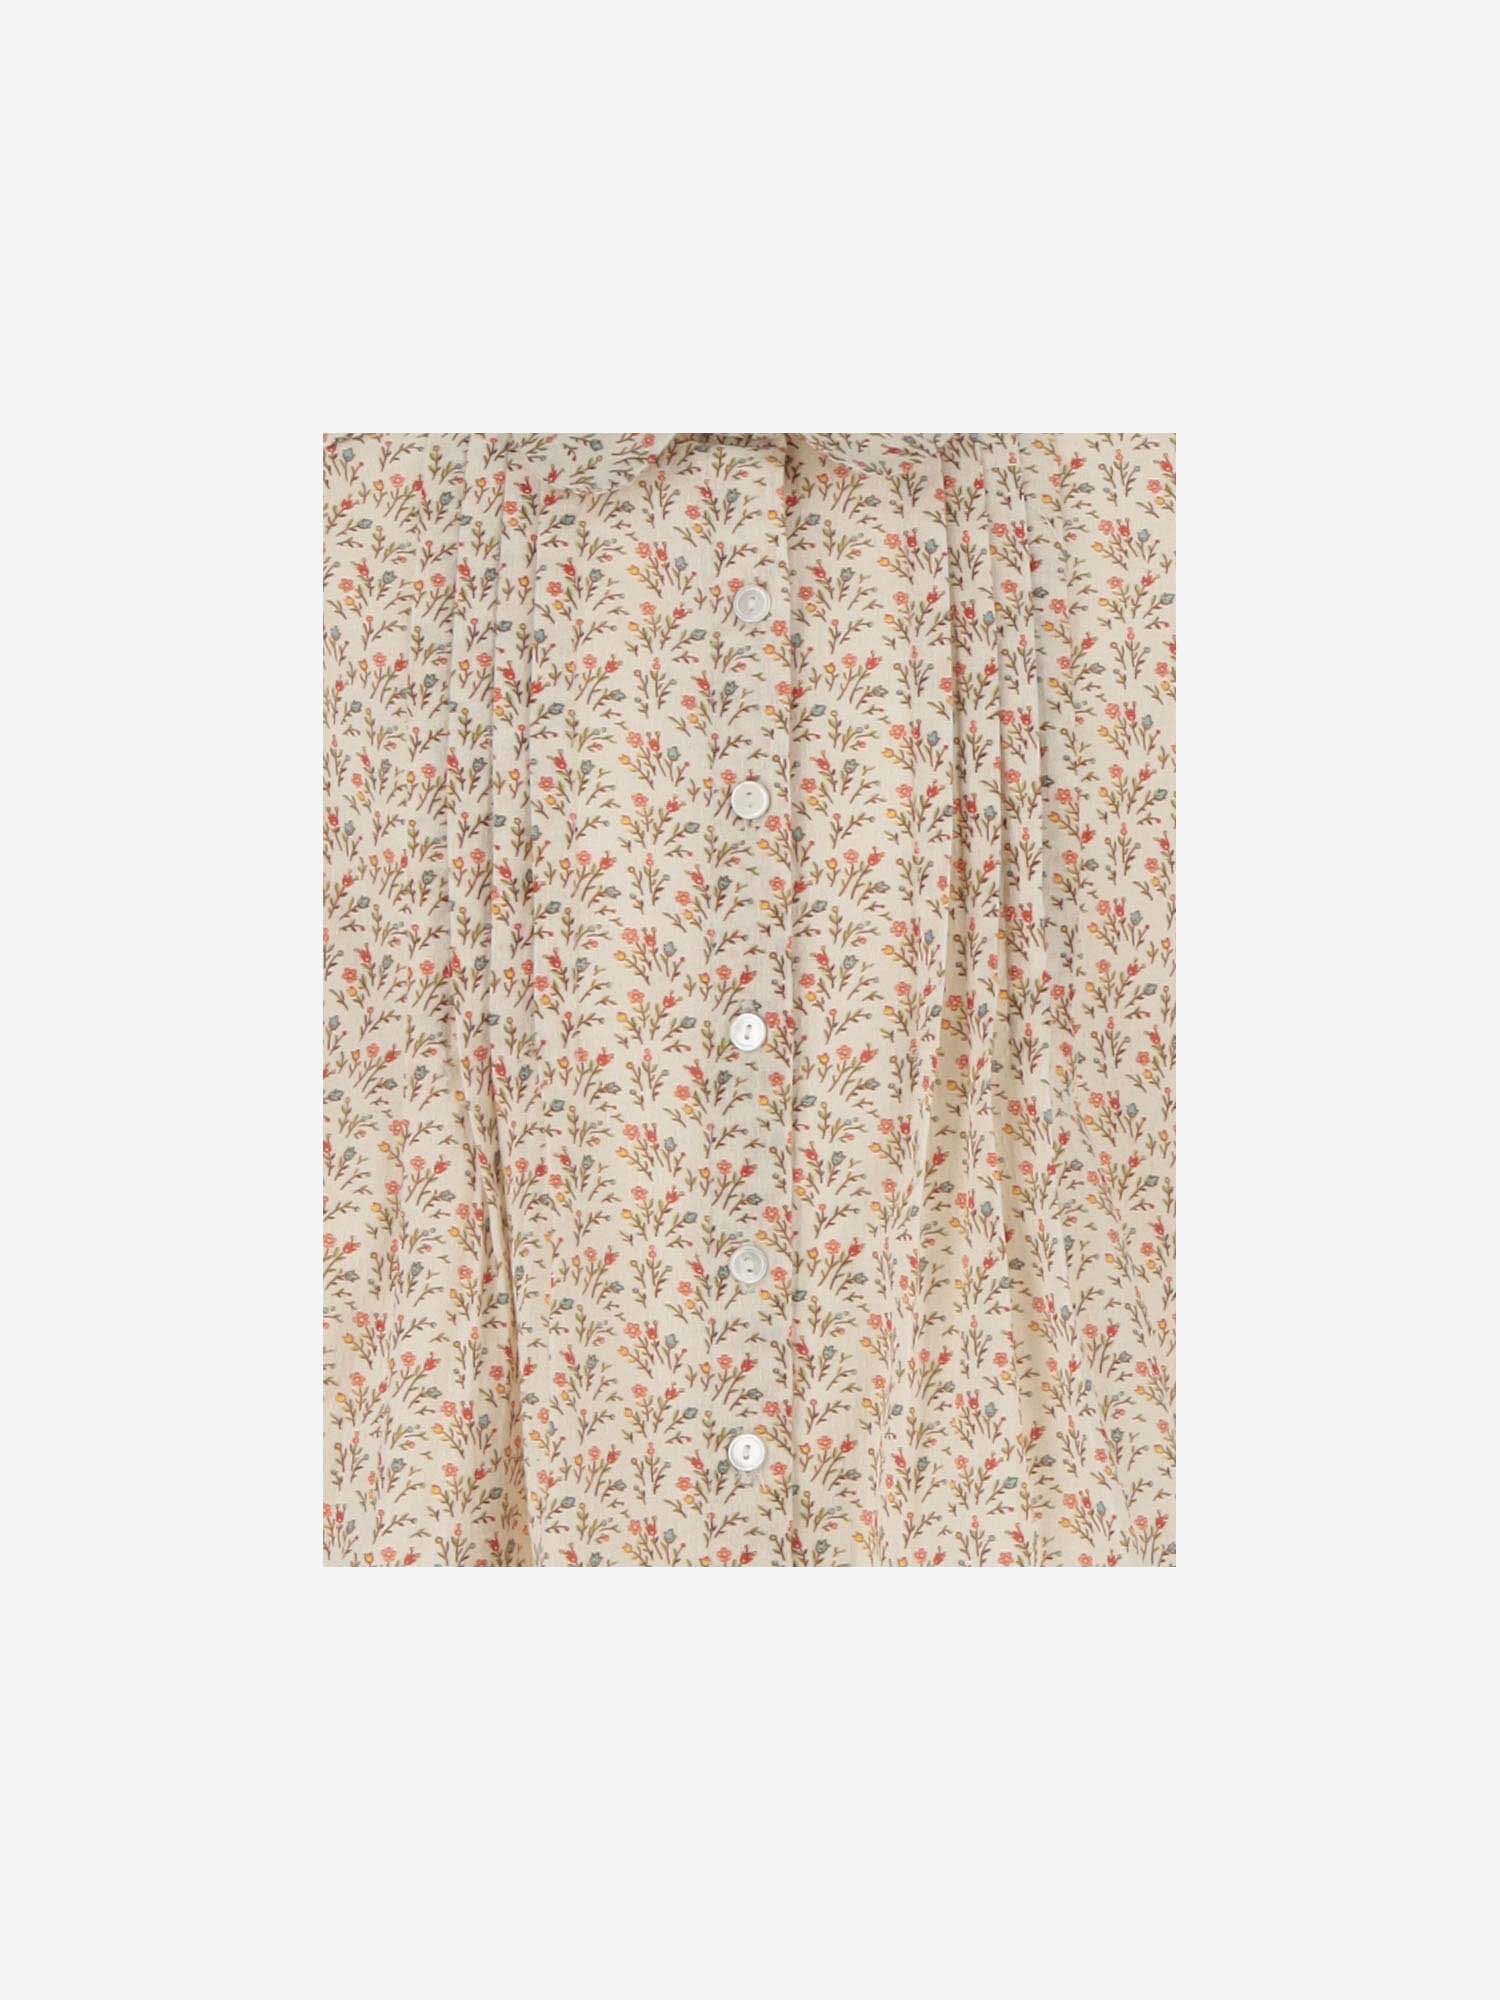 Shop Bonpoint Cotton Shirt With Floral Pattern